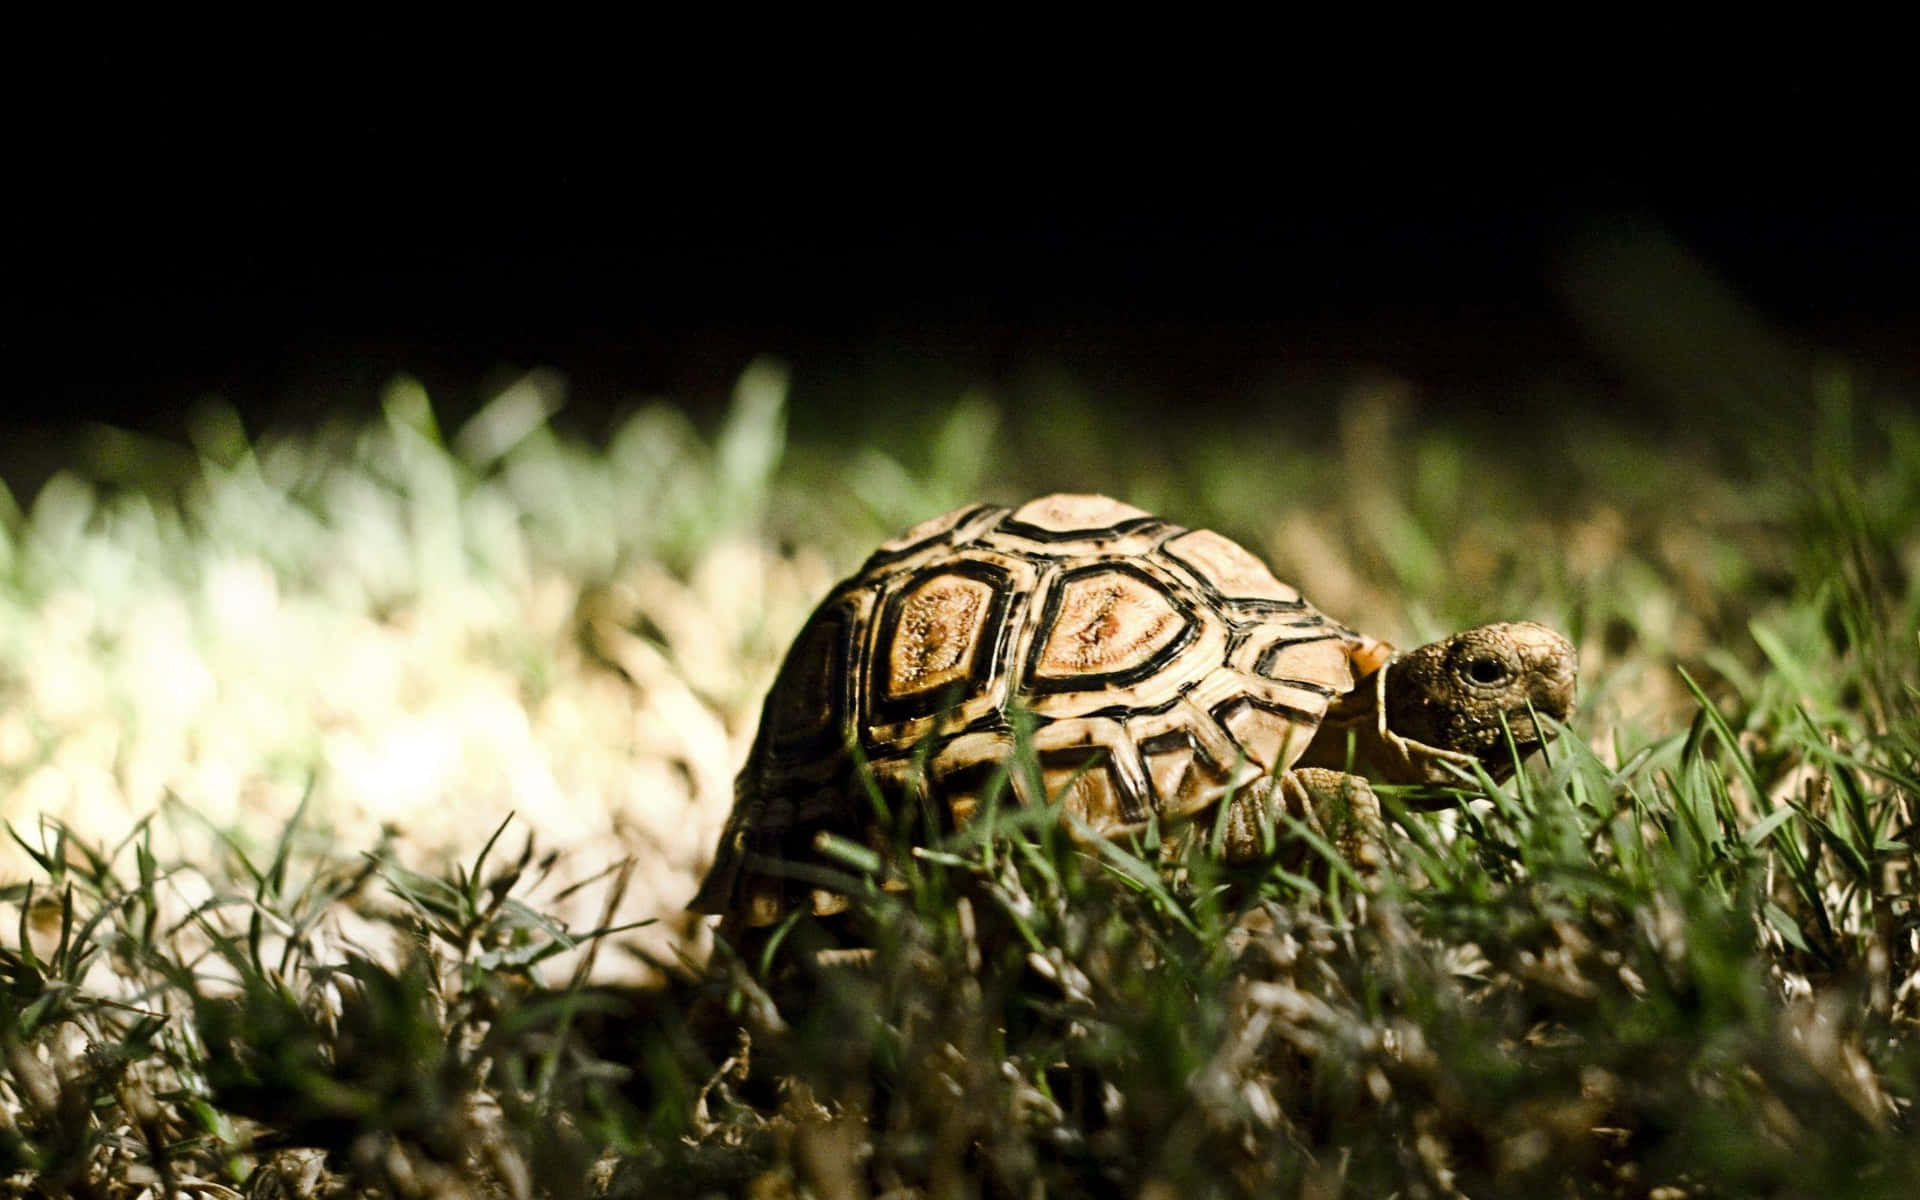 Caption: Beautiful Tortoise Exploring Its Surroundings